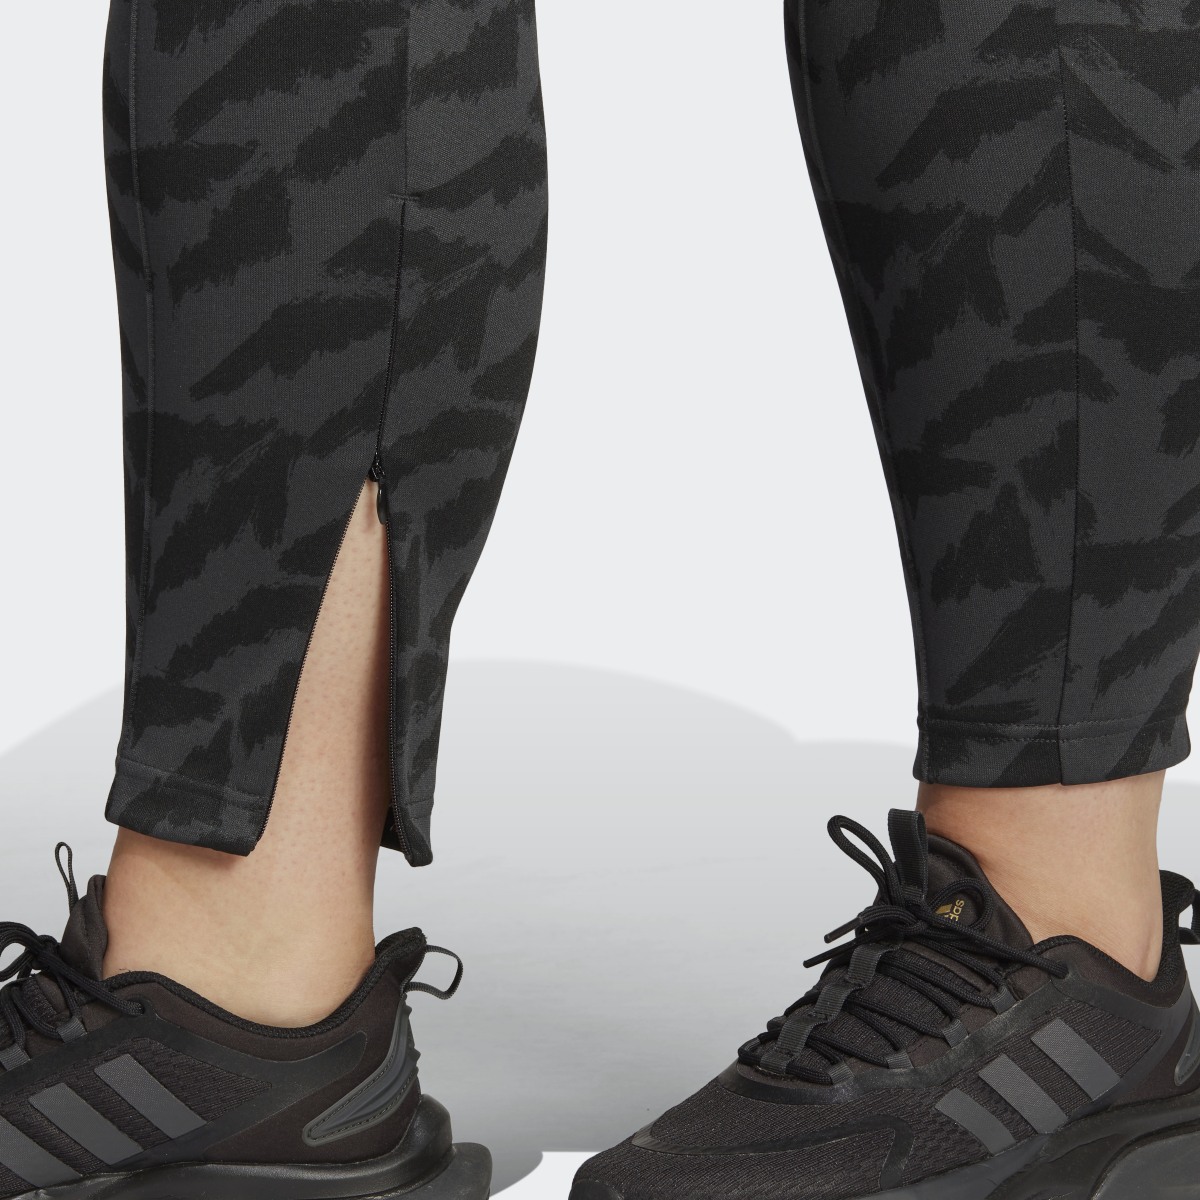 Adidas Track pants Tiro Suit Up Lifestyle (Curvy). 6